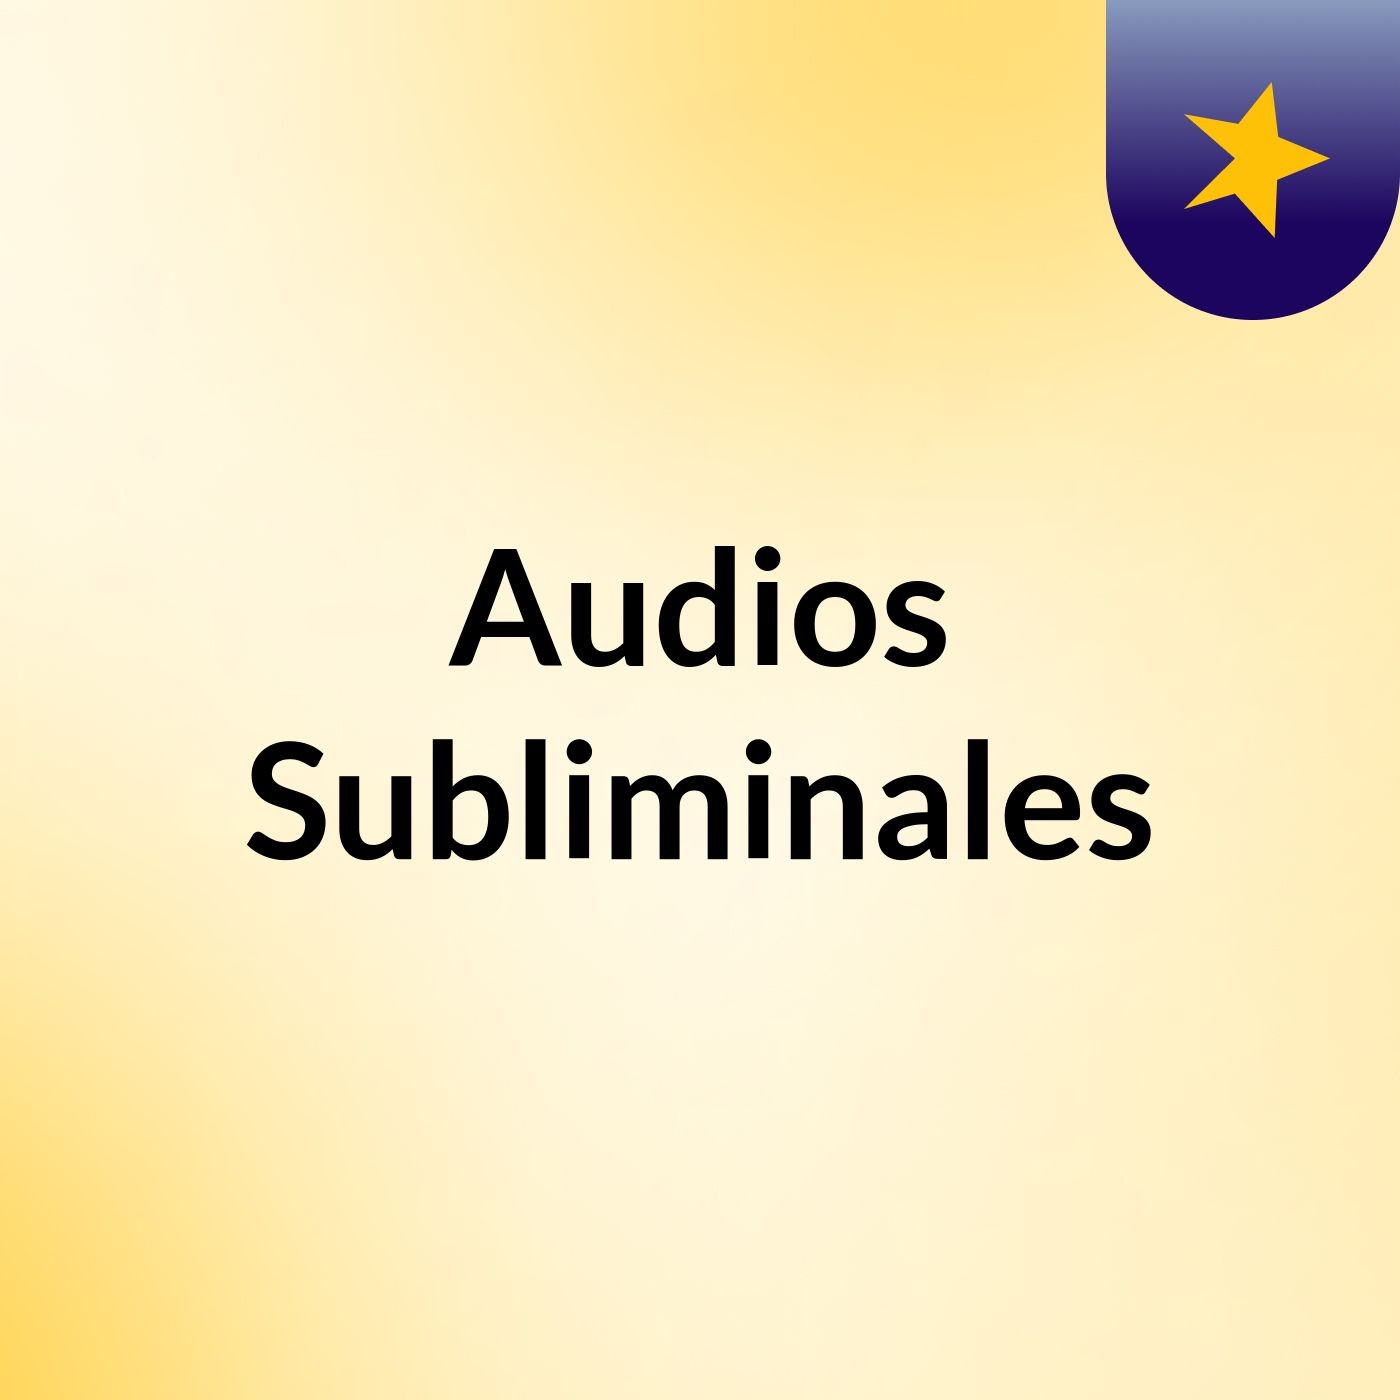 Audios Subliminales